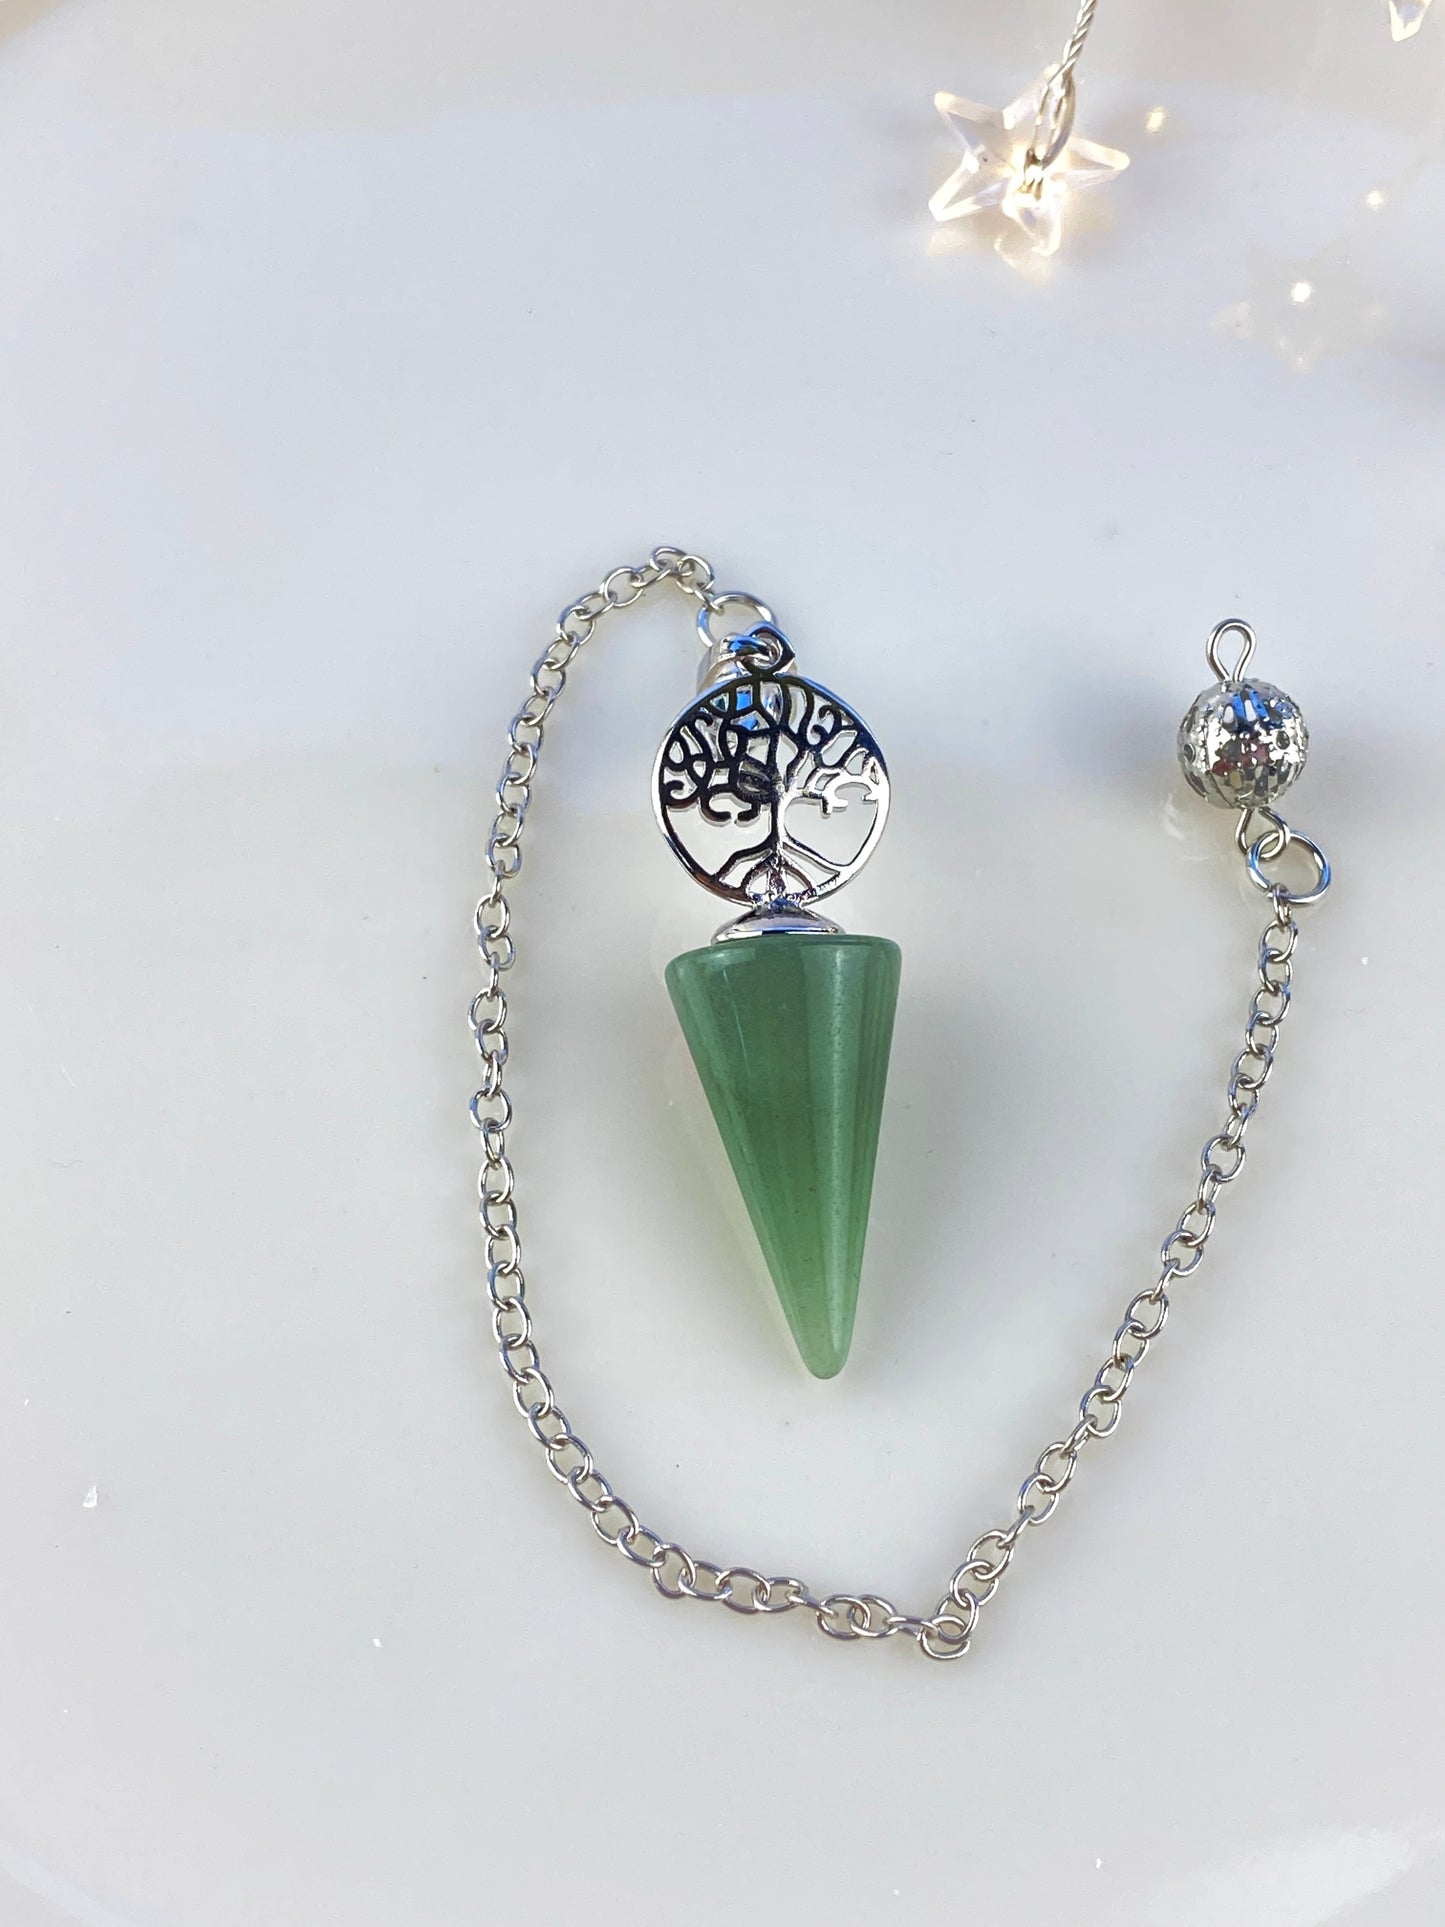 Green Aventurine crystal, tree of life pendulum, Pendant, Dowsing pendulum.